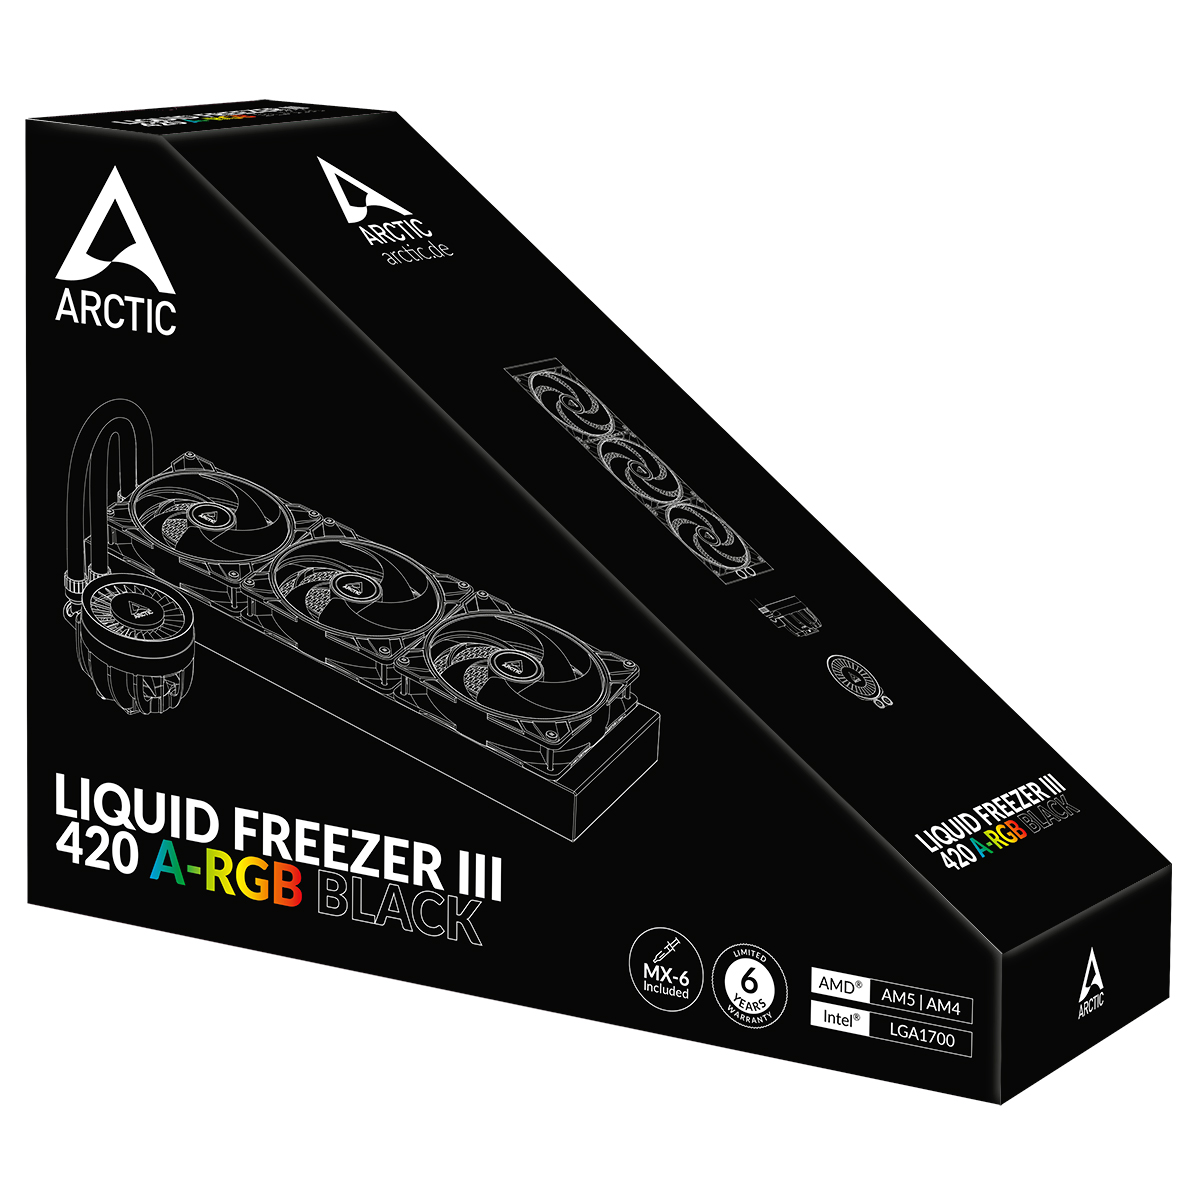 Liquid_Freezer_III_420_ARGB_Black_Rainbow_G11